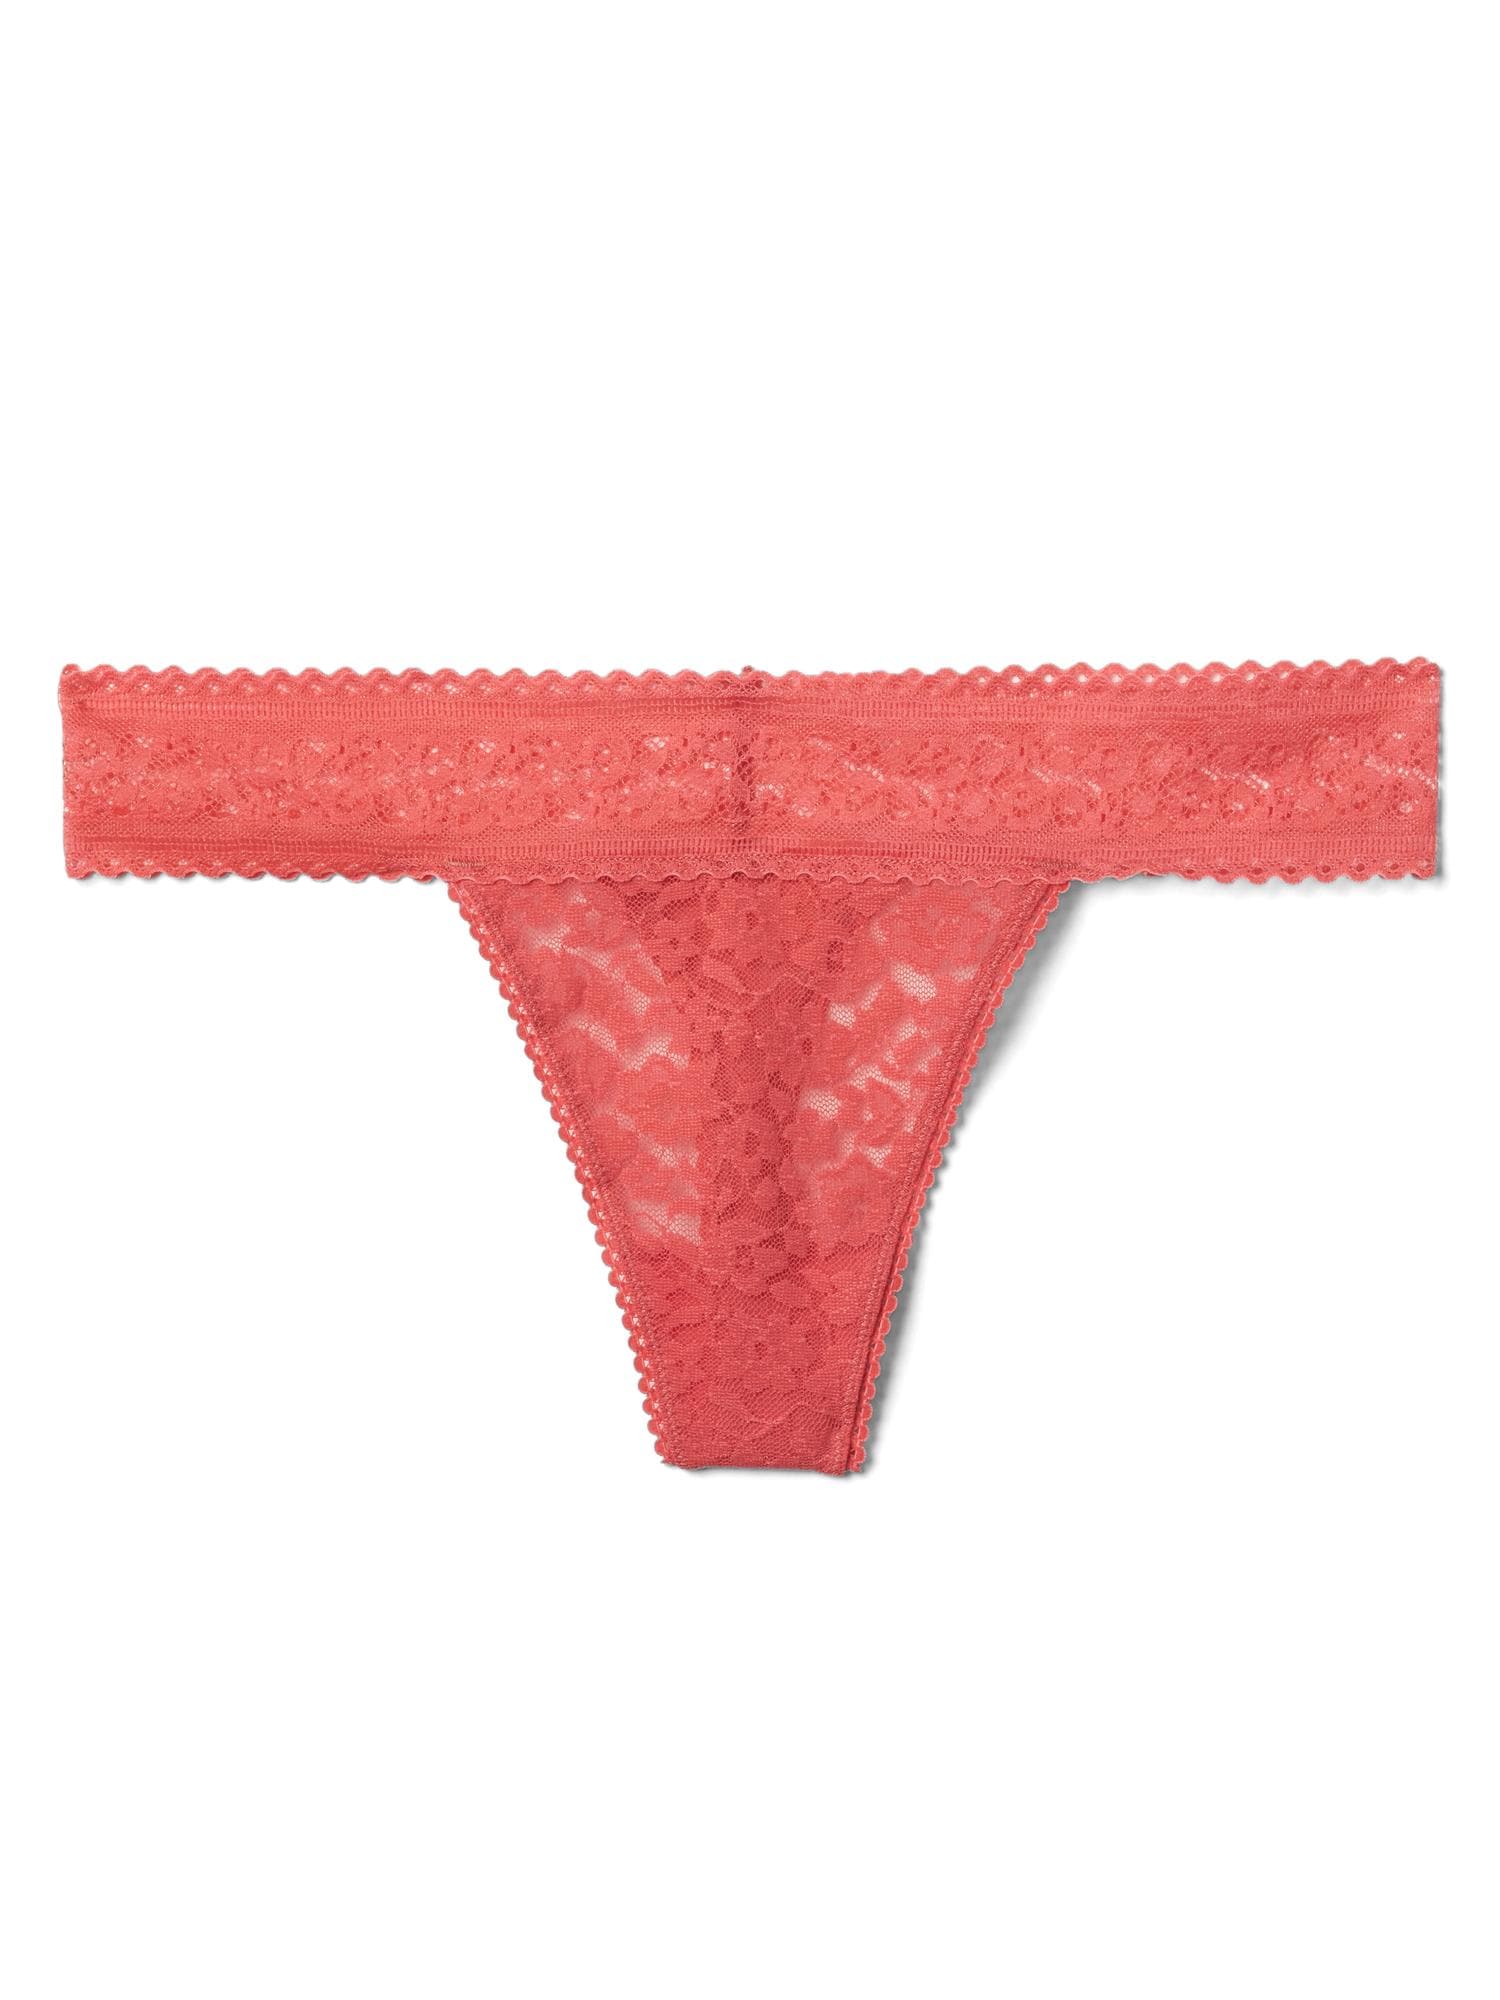 PeliBeli Women Underwear Thong Lace Trims Low Rise G-Strings Panties  Variety Pack of 10 Bulk Assorted